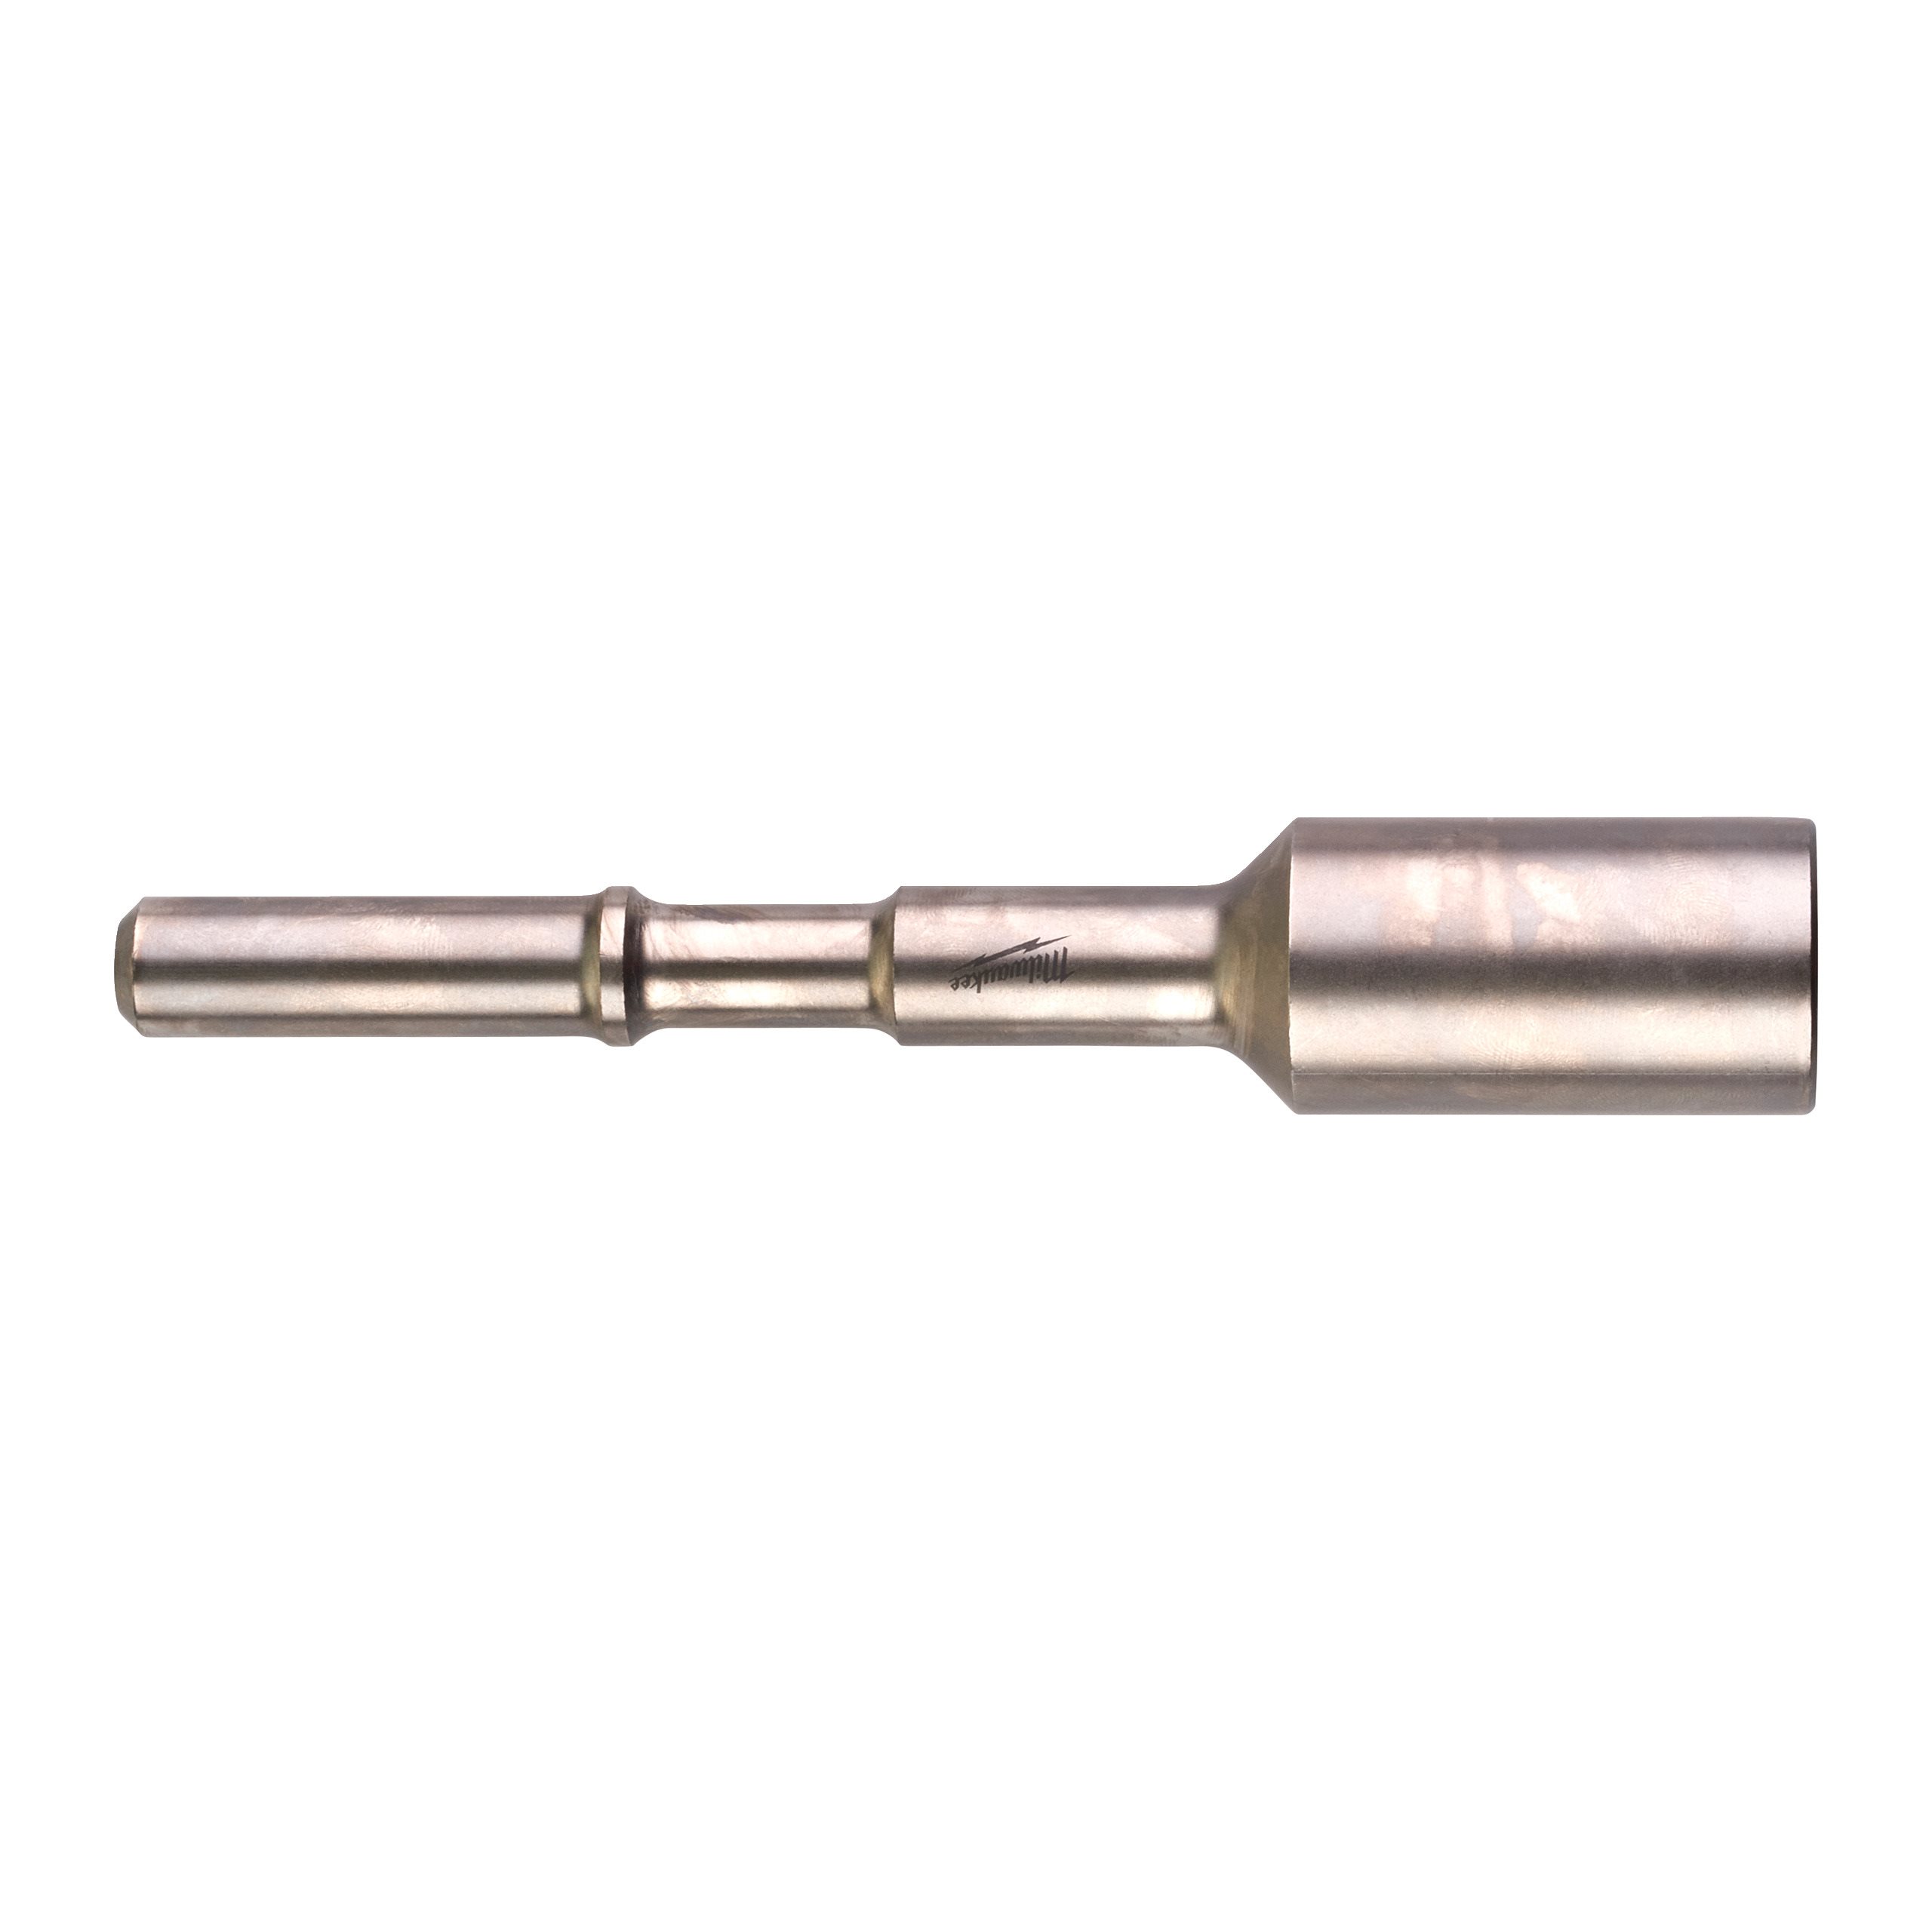 21 mm Hex electrode / ground rod drivers | Milwaukee Tool EU